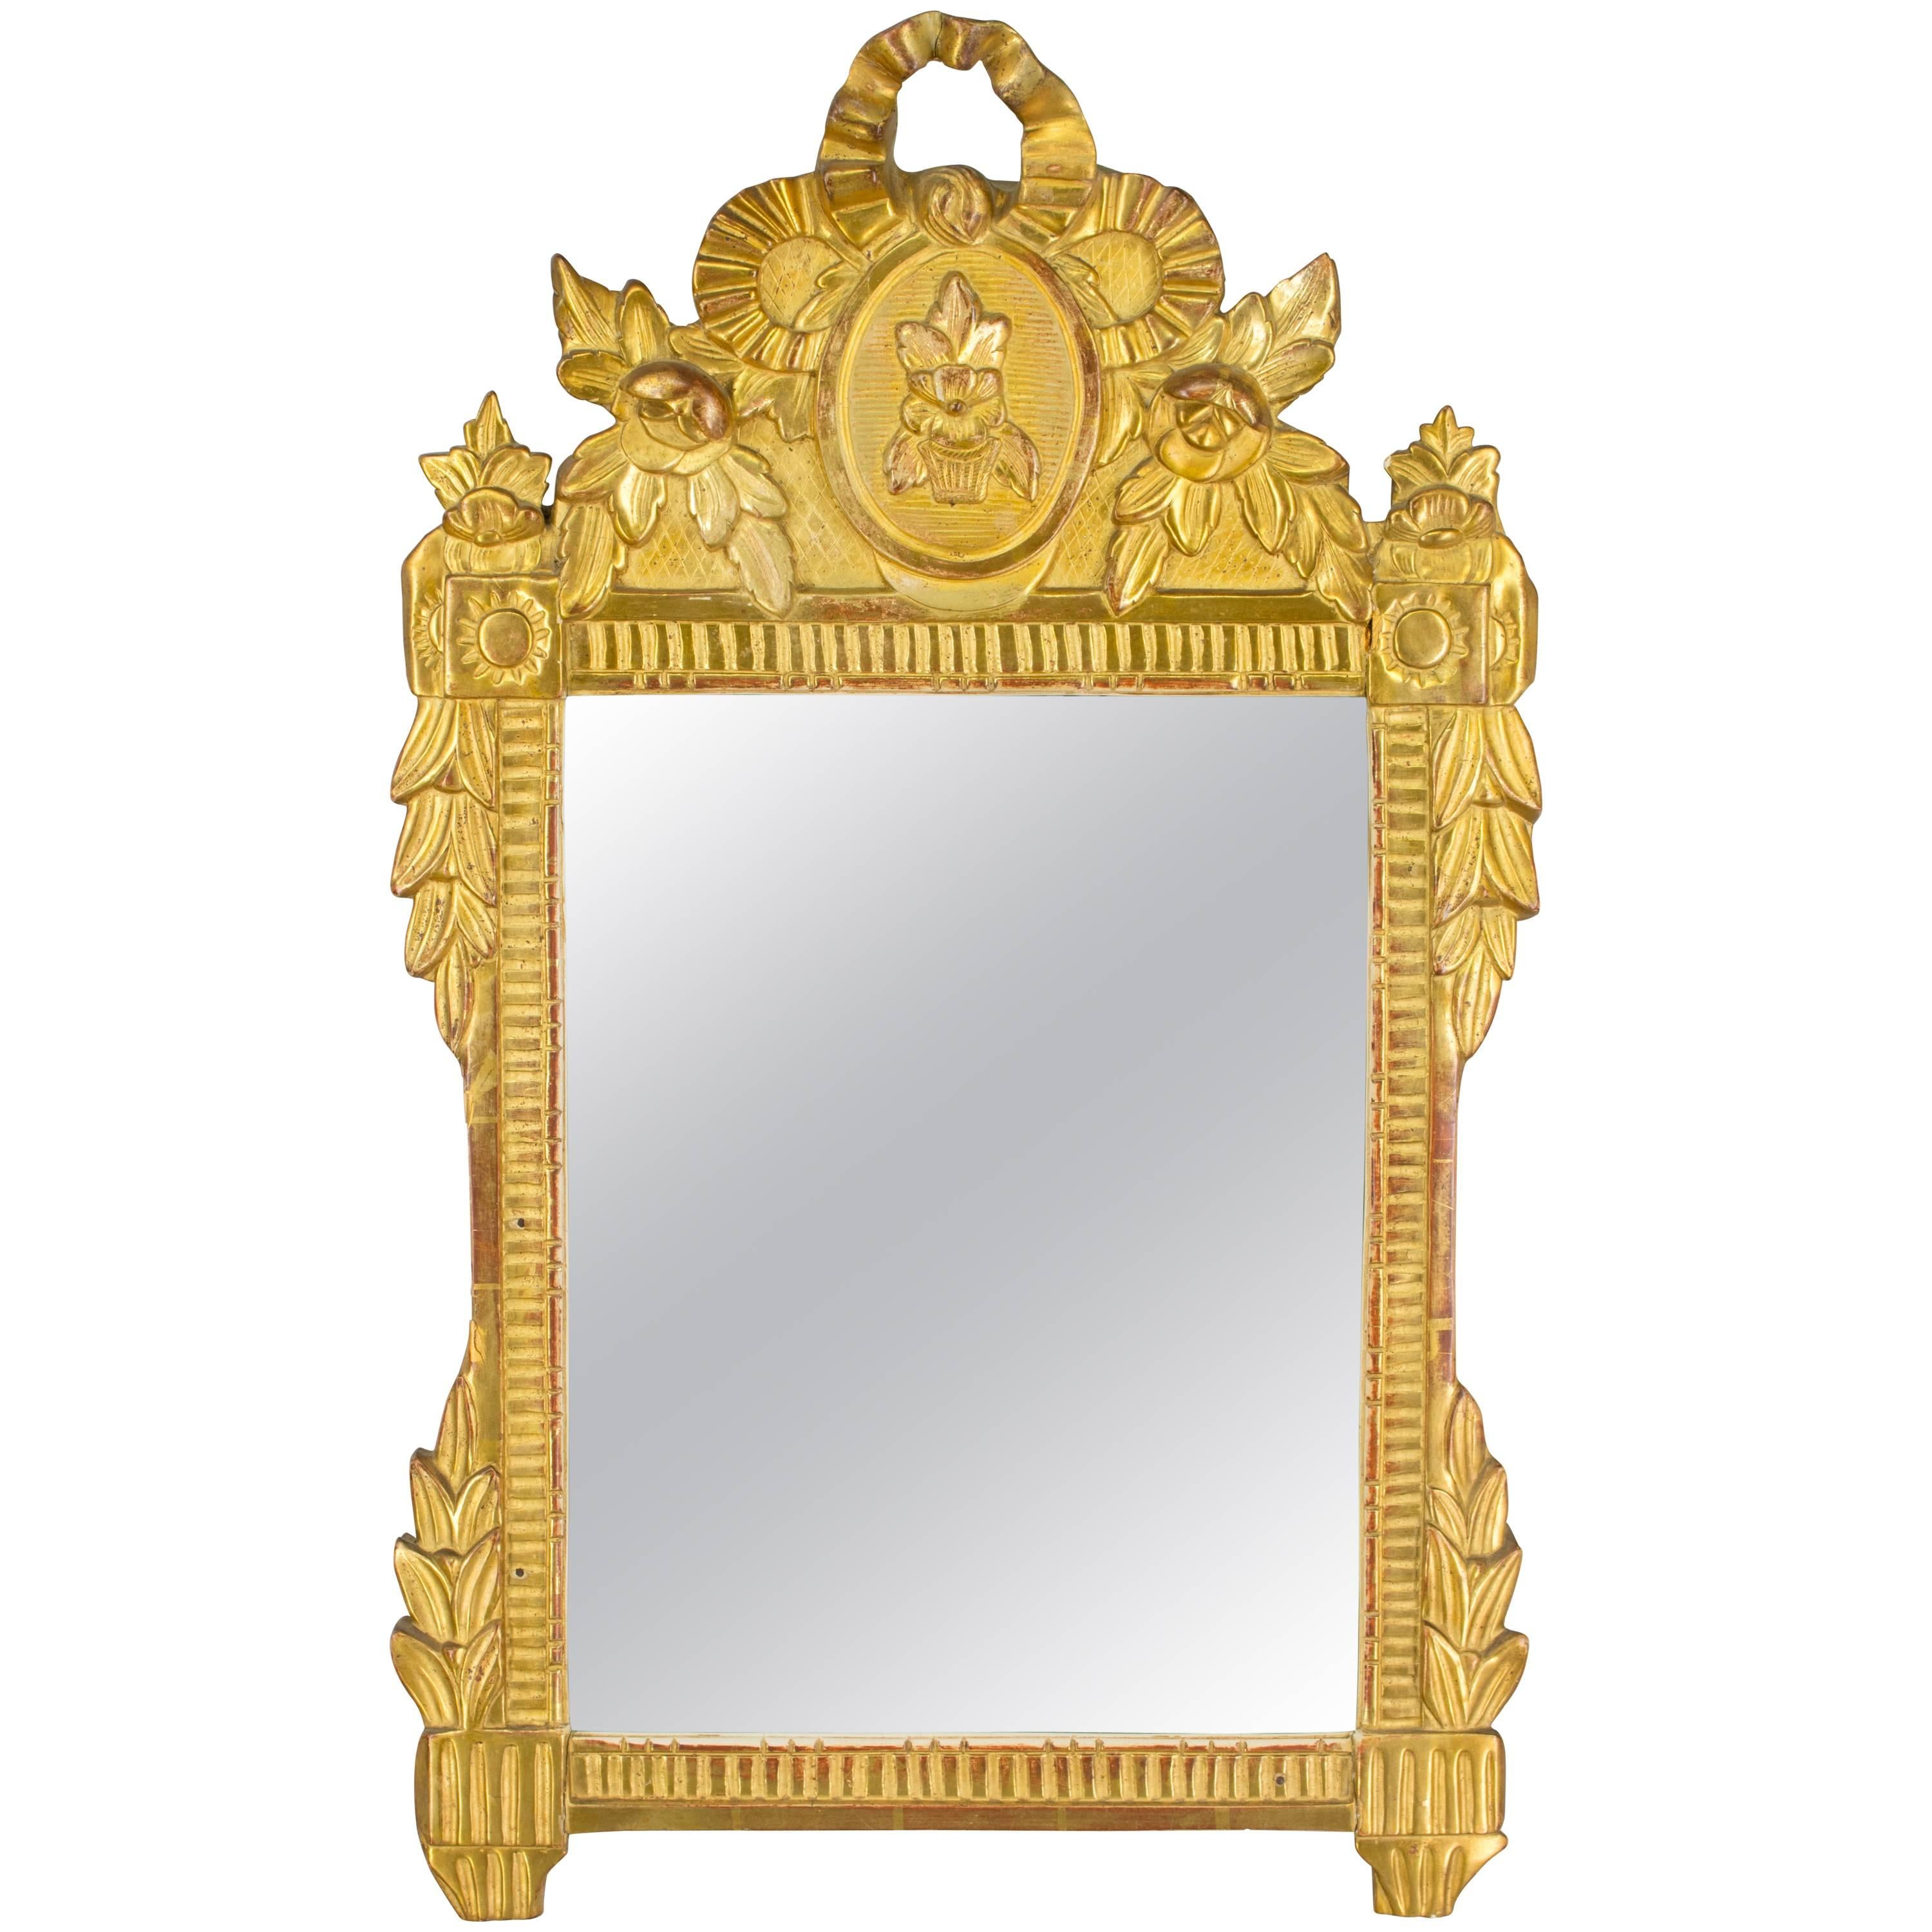 19th Century Louis XVI Style Gilded Mirror